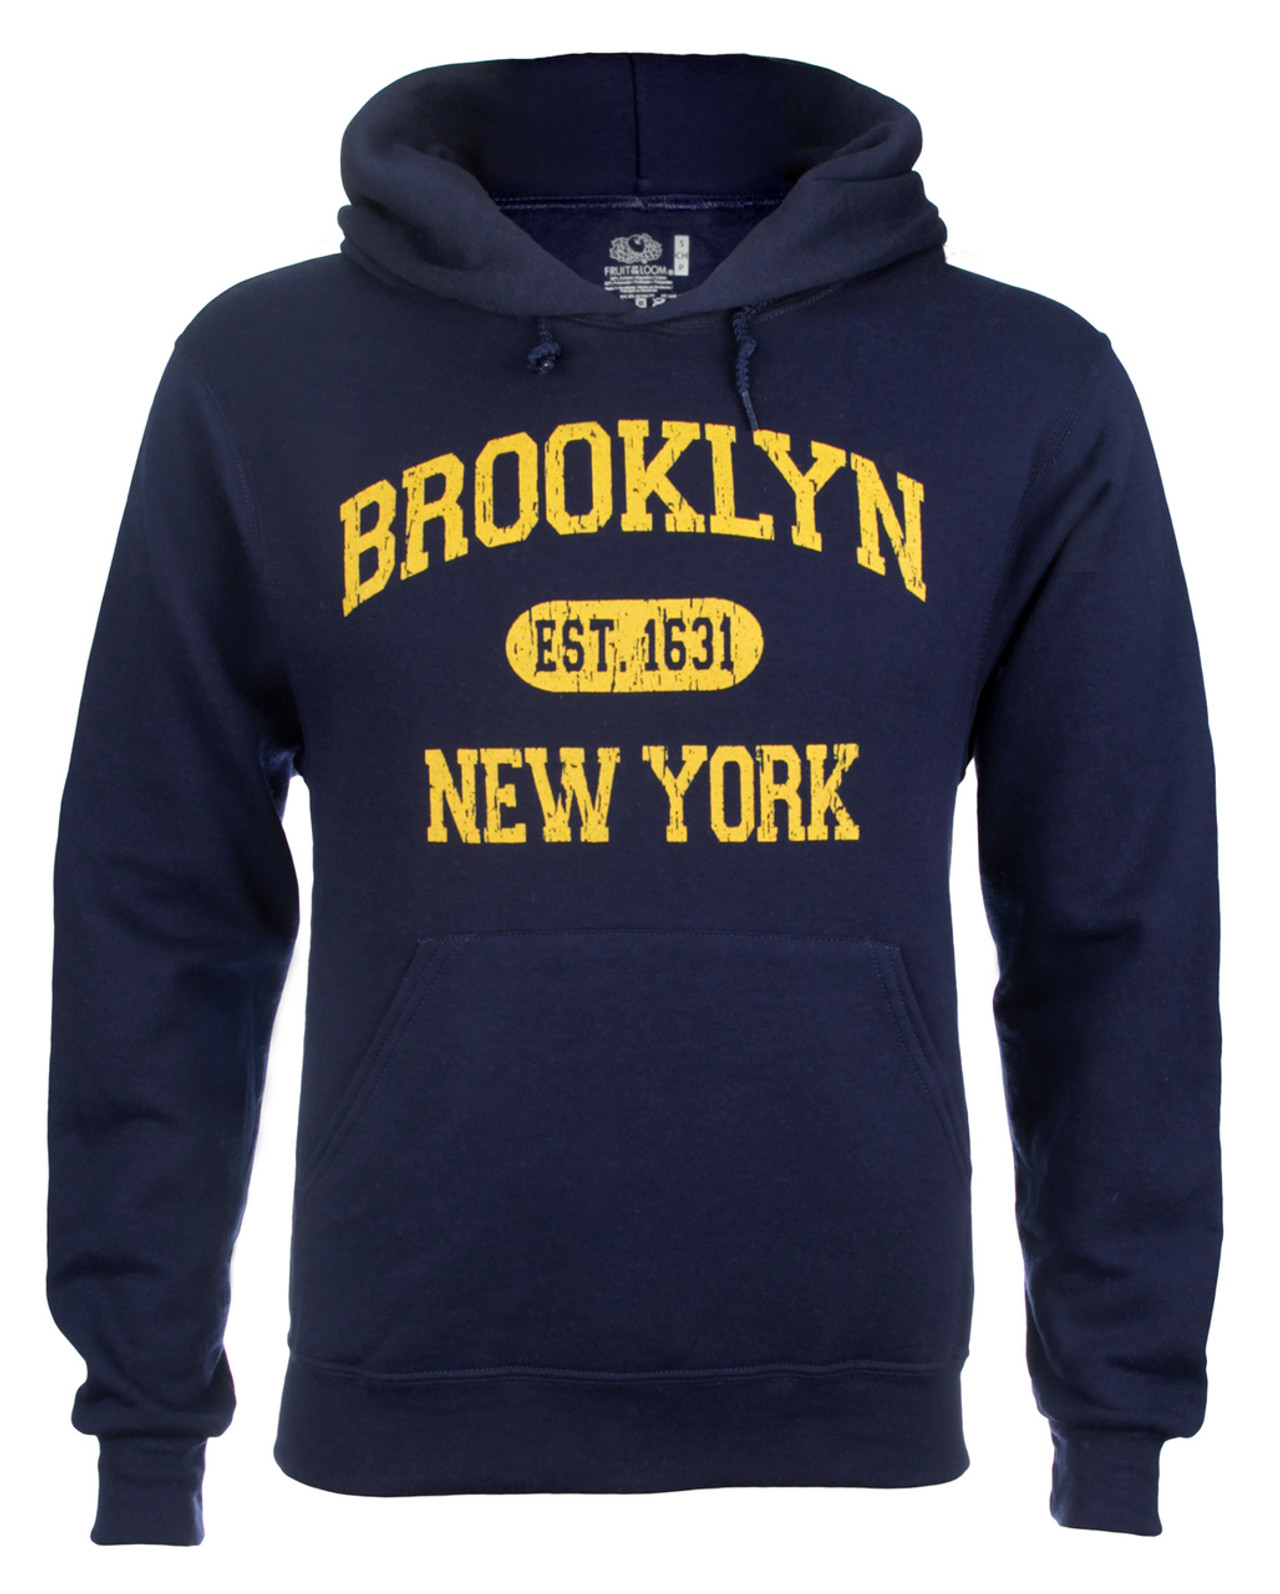 Brooklyn Est 1631 Hooded Sweatshirt - Grey